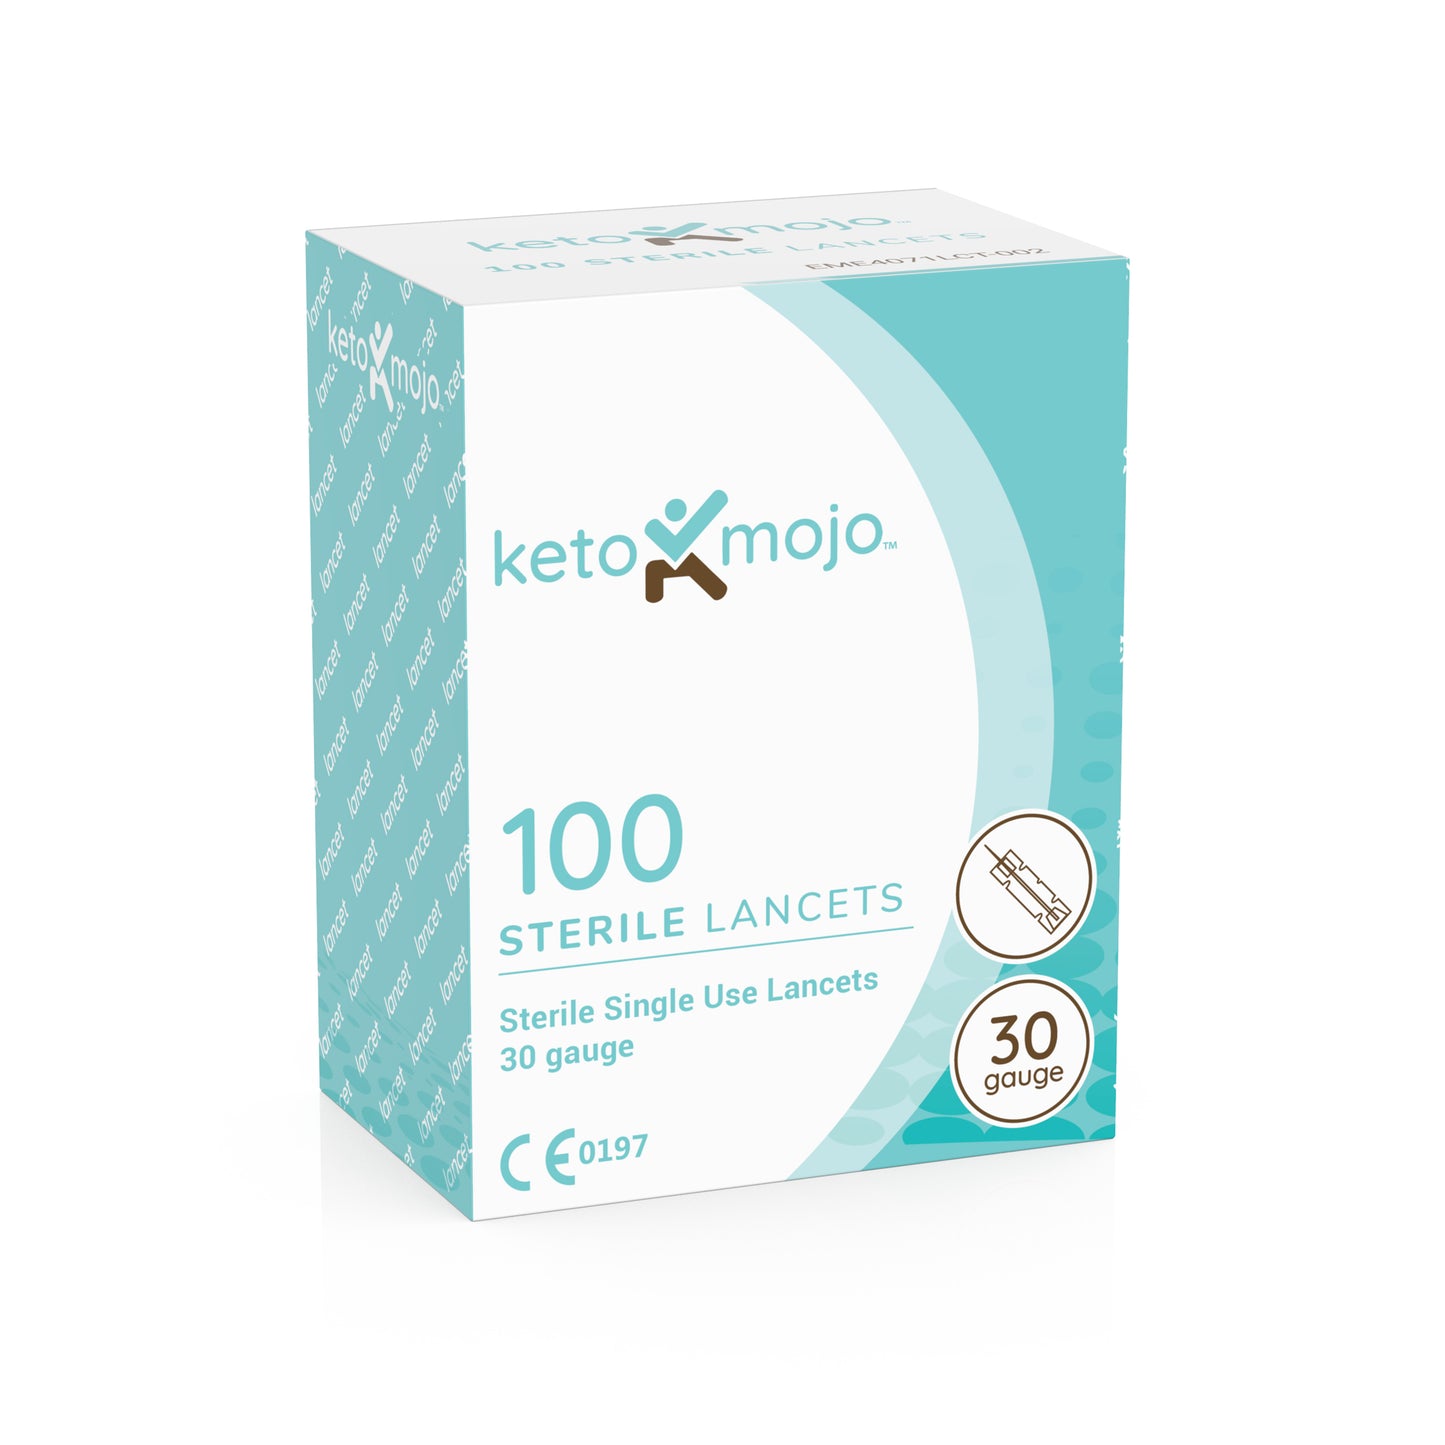 GKI Glucose & Ketone Strip Combo Pack + Lanzetten - THE SUPER PACK